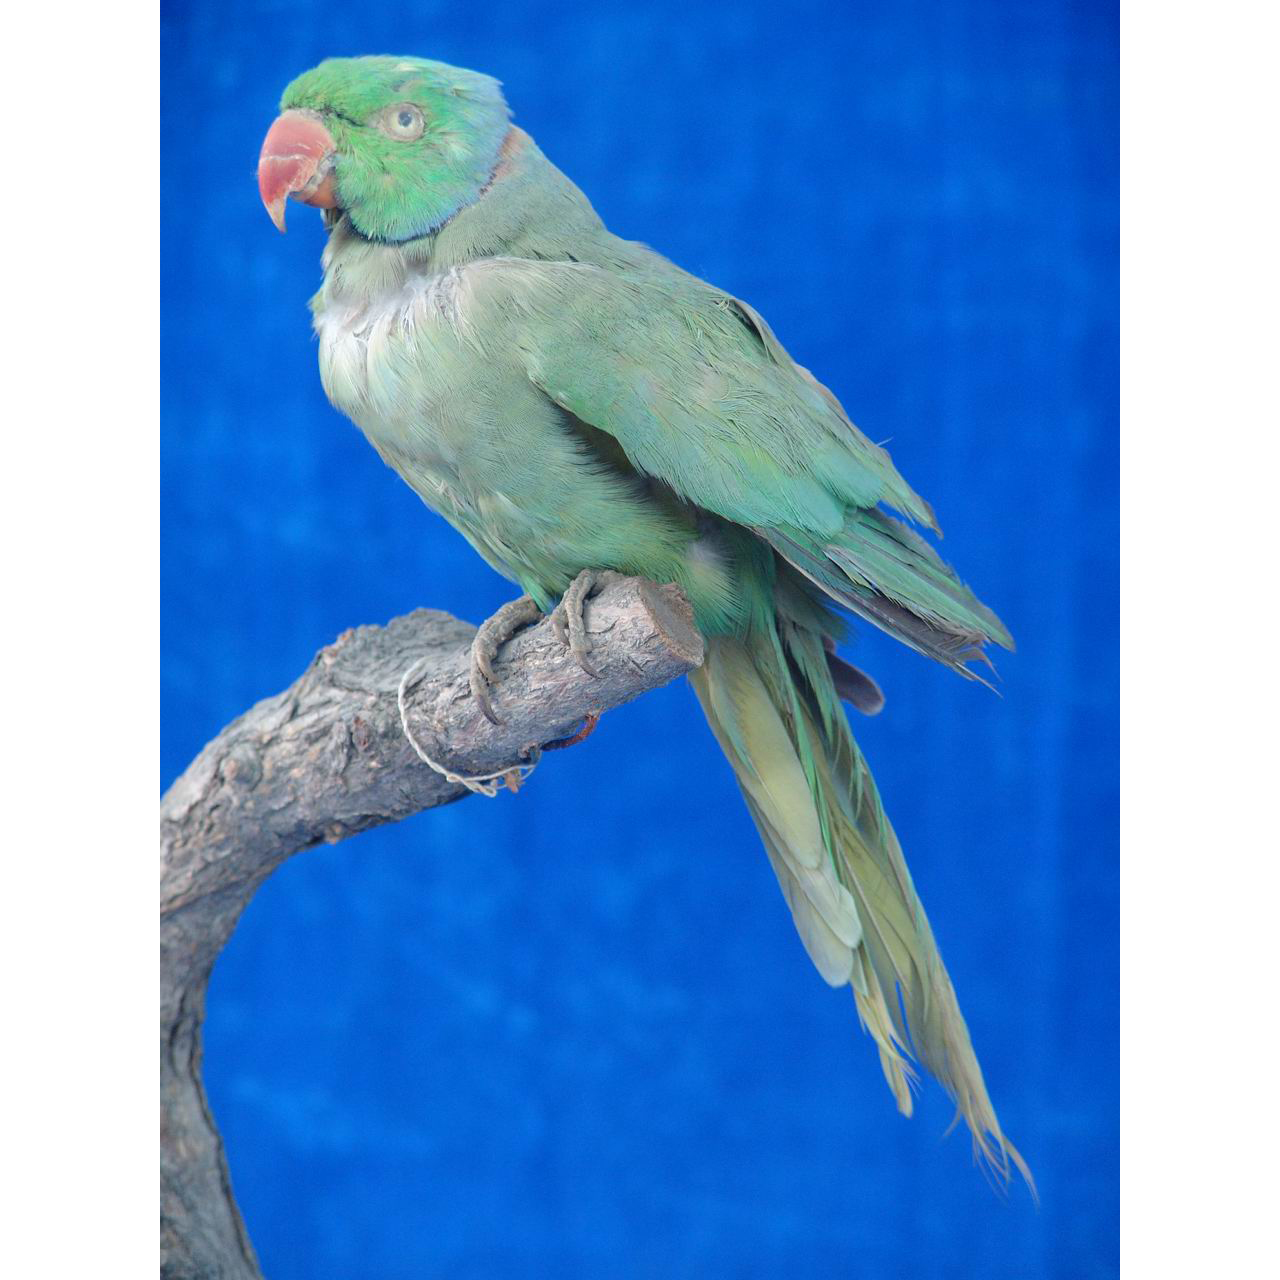 100+ Colorful Parrot Photos · Pexels · Free Stock Photos